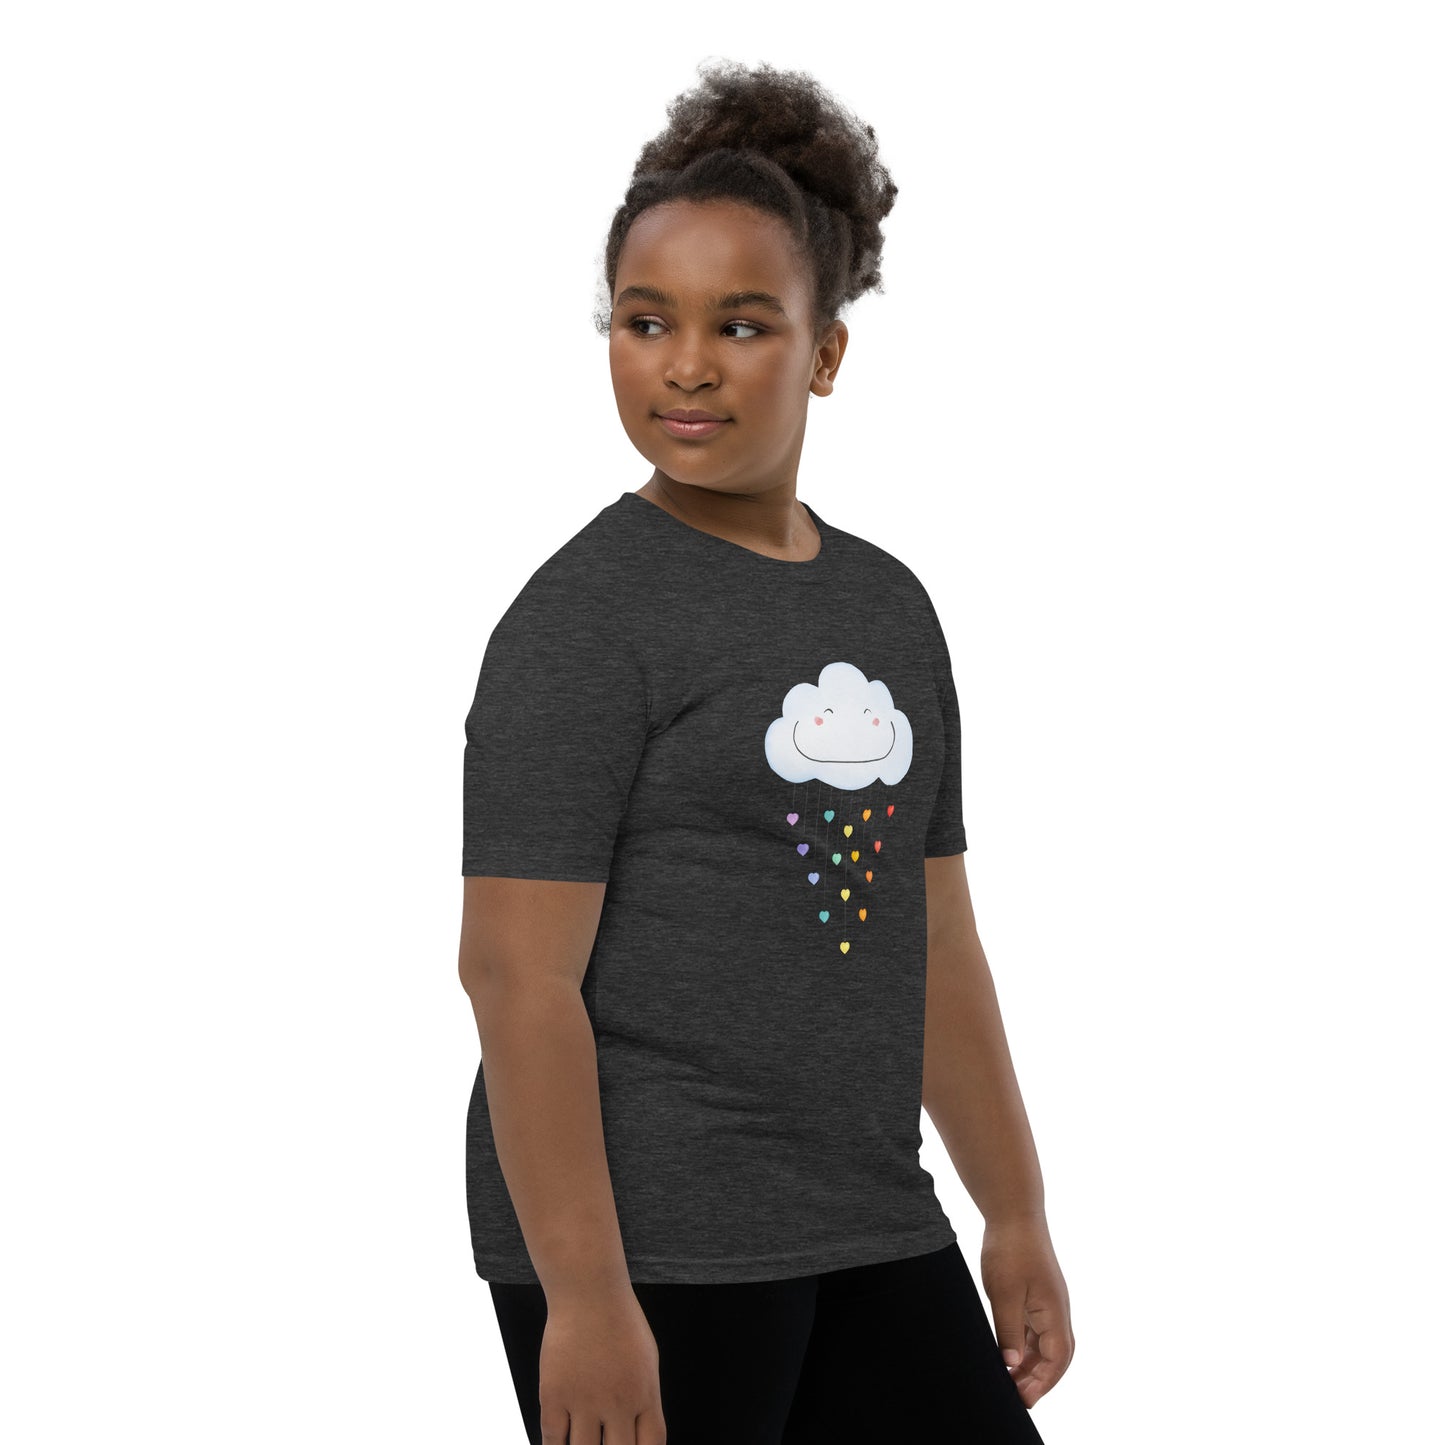 Youth Short Sleeve T-Shirt "Happy rainbow cloud"